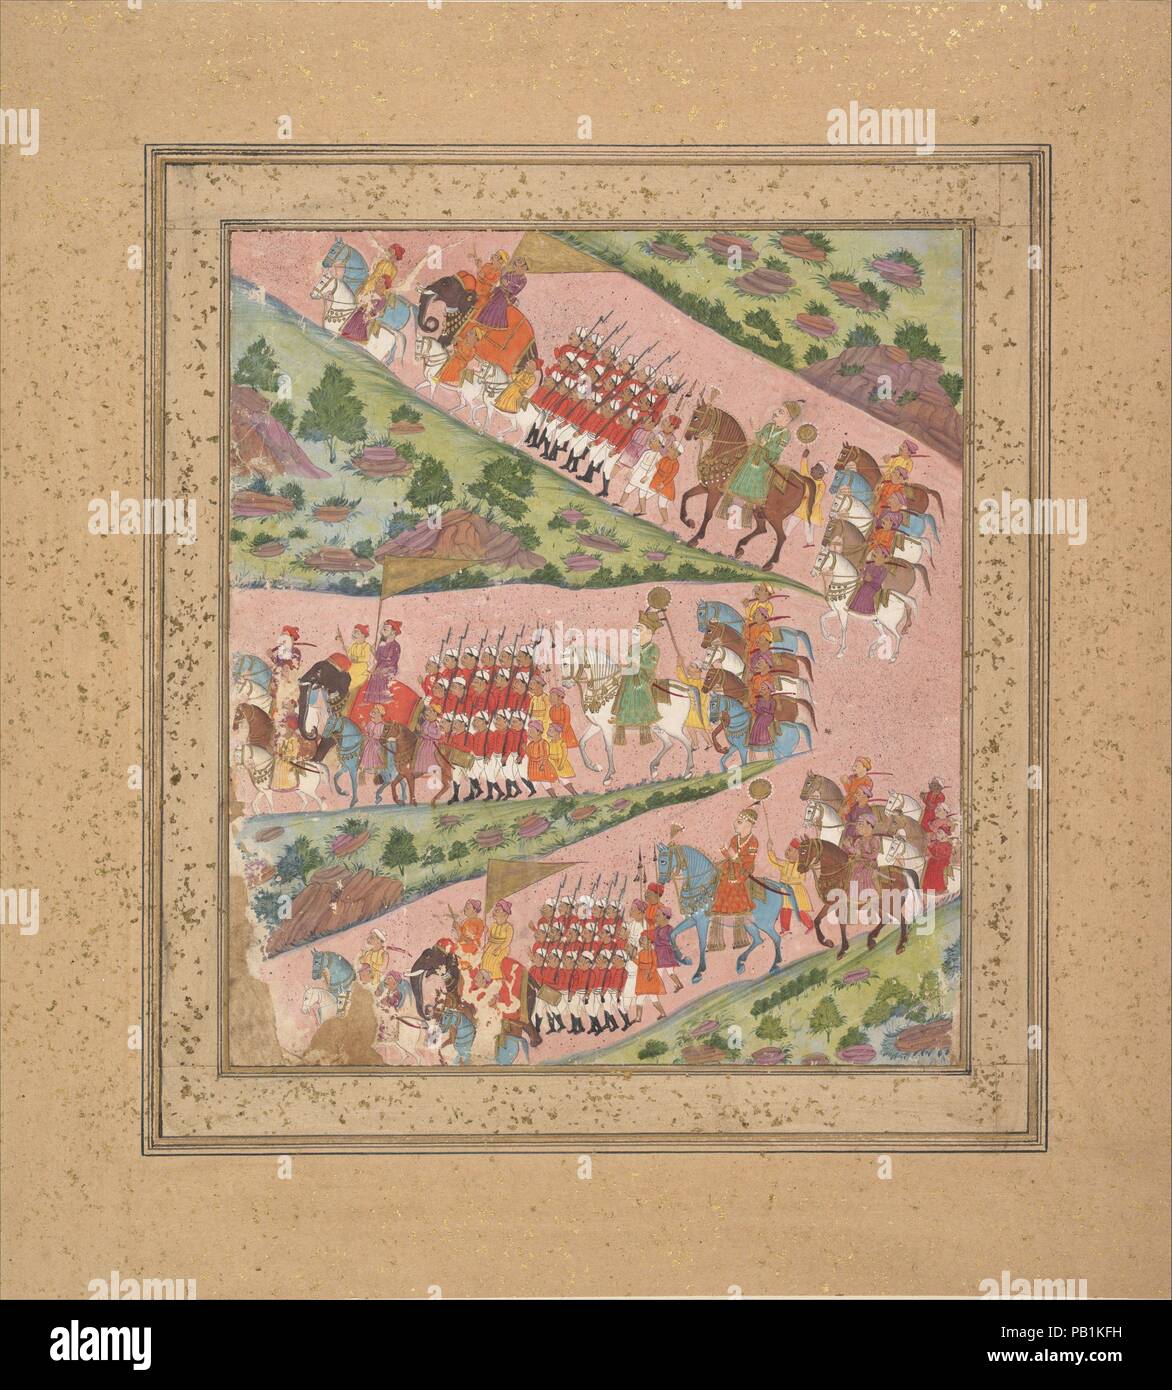 The Three Roads. Culture: India (Hyderabad). Dimensions: 7 5/16 x 6 7/16 in. (18.6 x 16.4 cm). Date: ca. 1840. Museum: Metropolitan Museum of Art, New York, USA. Stock Photo